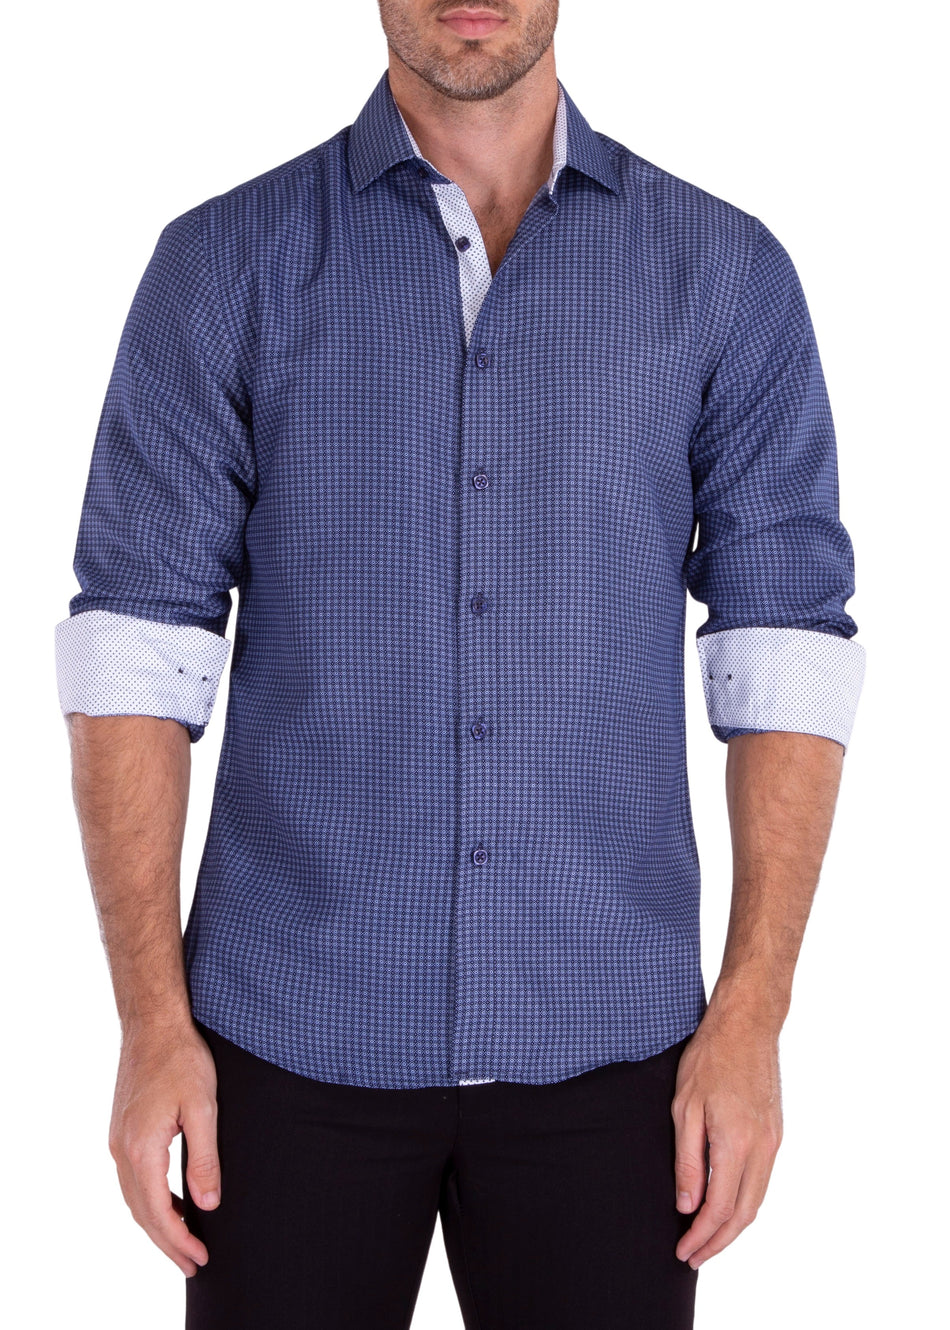 222302 - Navy Long Sleeve Shirt